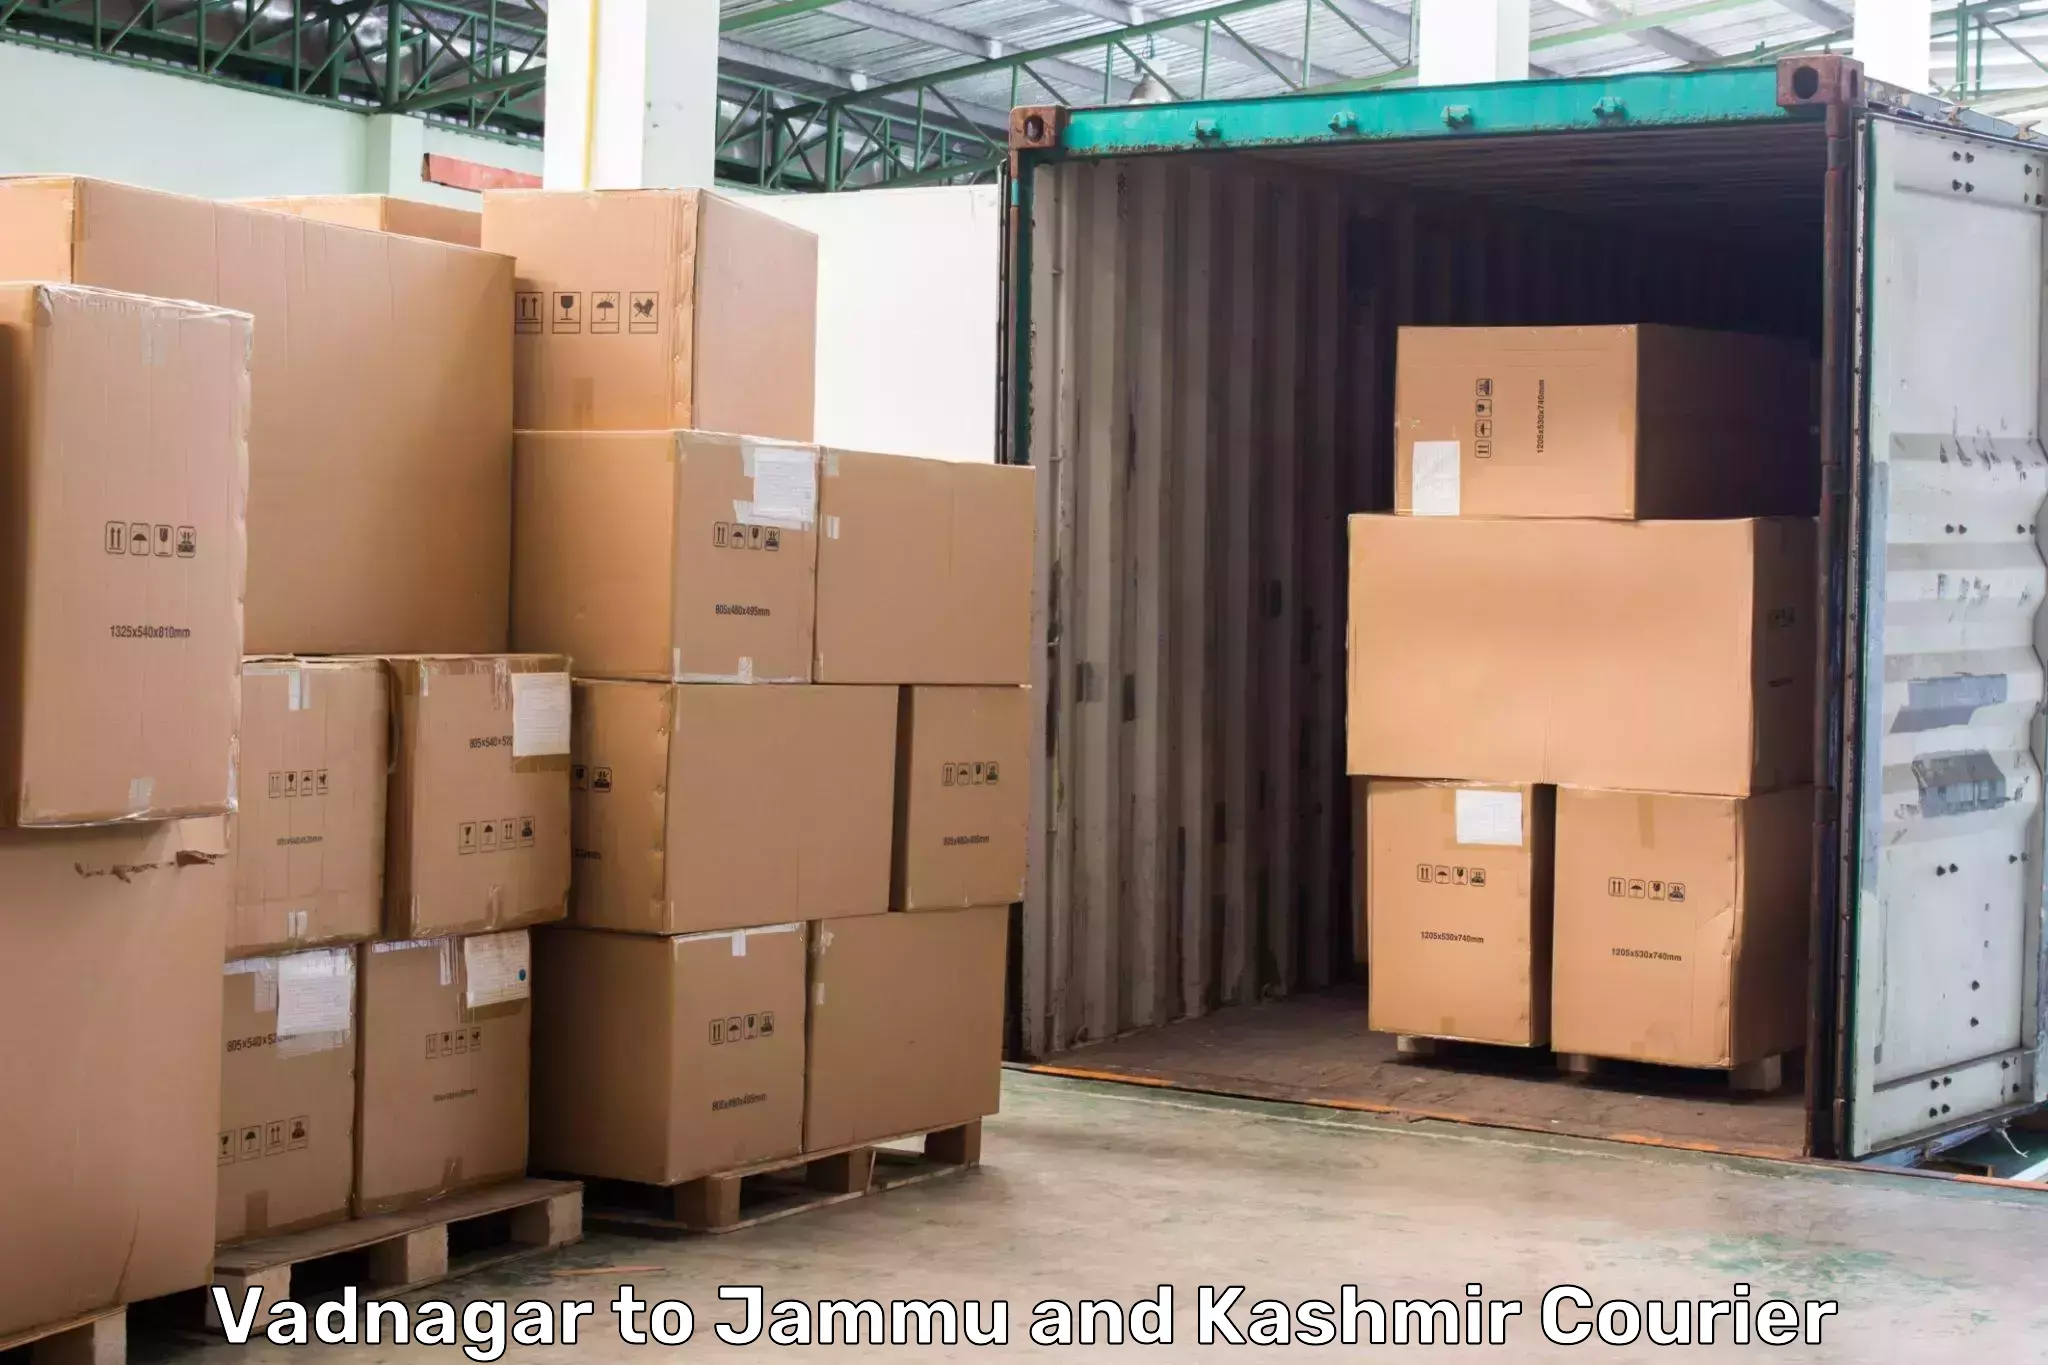 Tech-enabled shipping in Vadnagar to Srinagar Kashmir